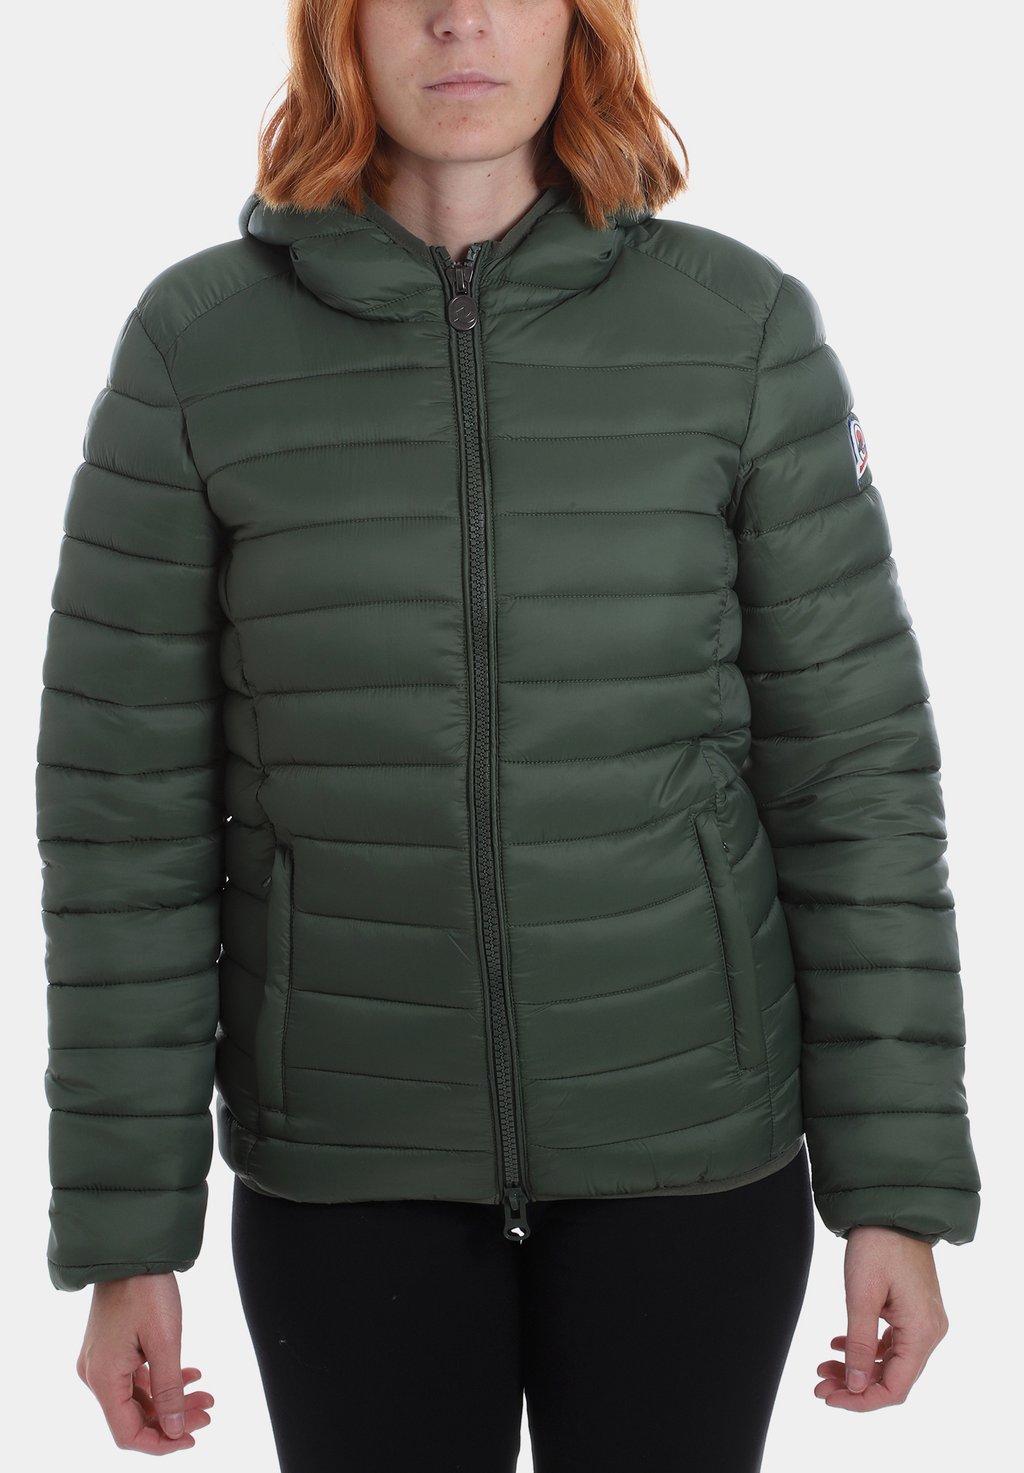 Зимняя куртка INVICTA, зеленая